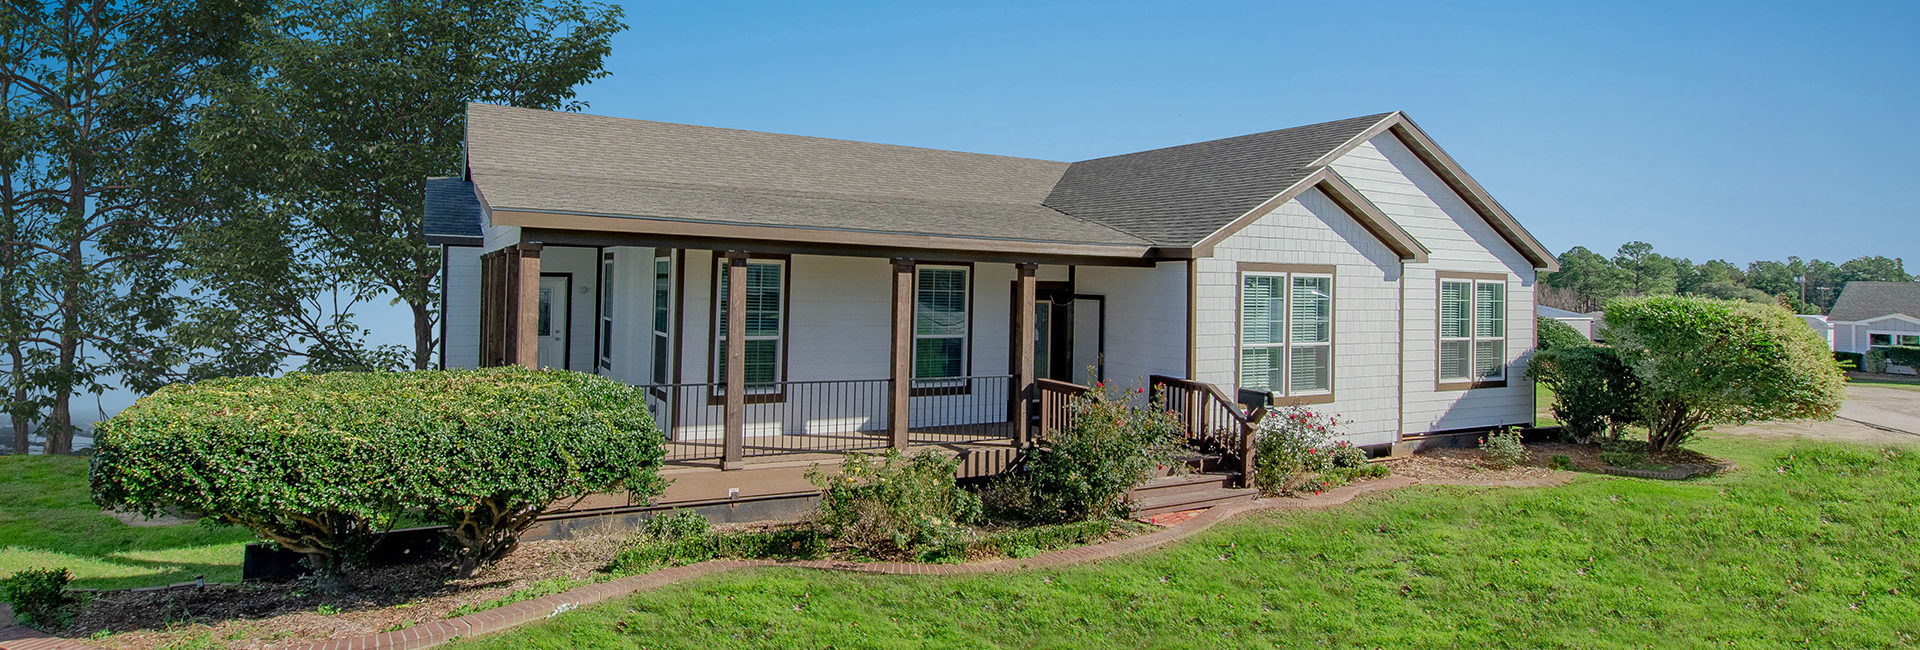 Exterior of the house Sequia made by Pratt Homes, Tyler, Texas